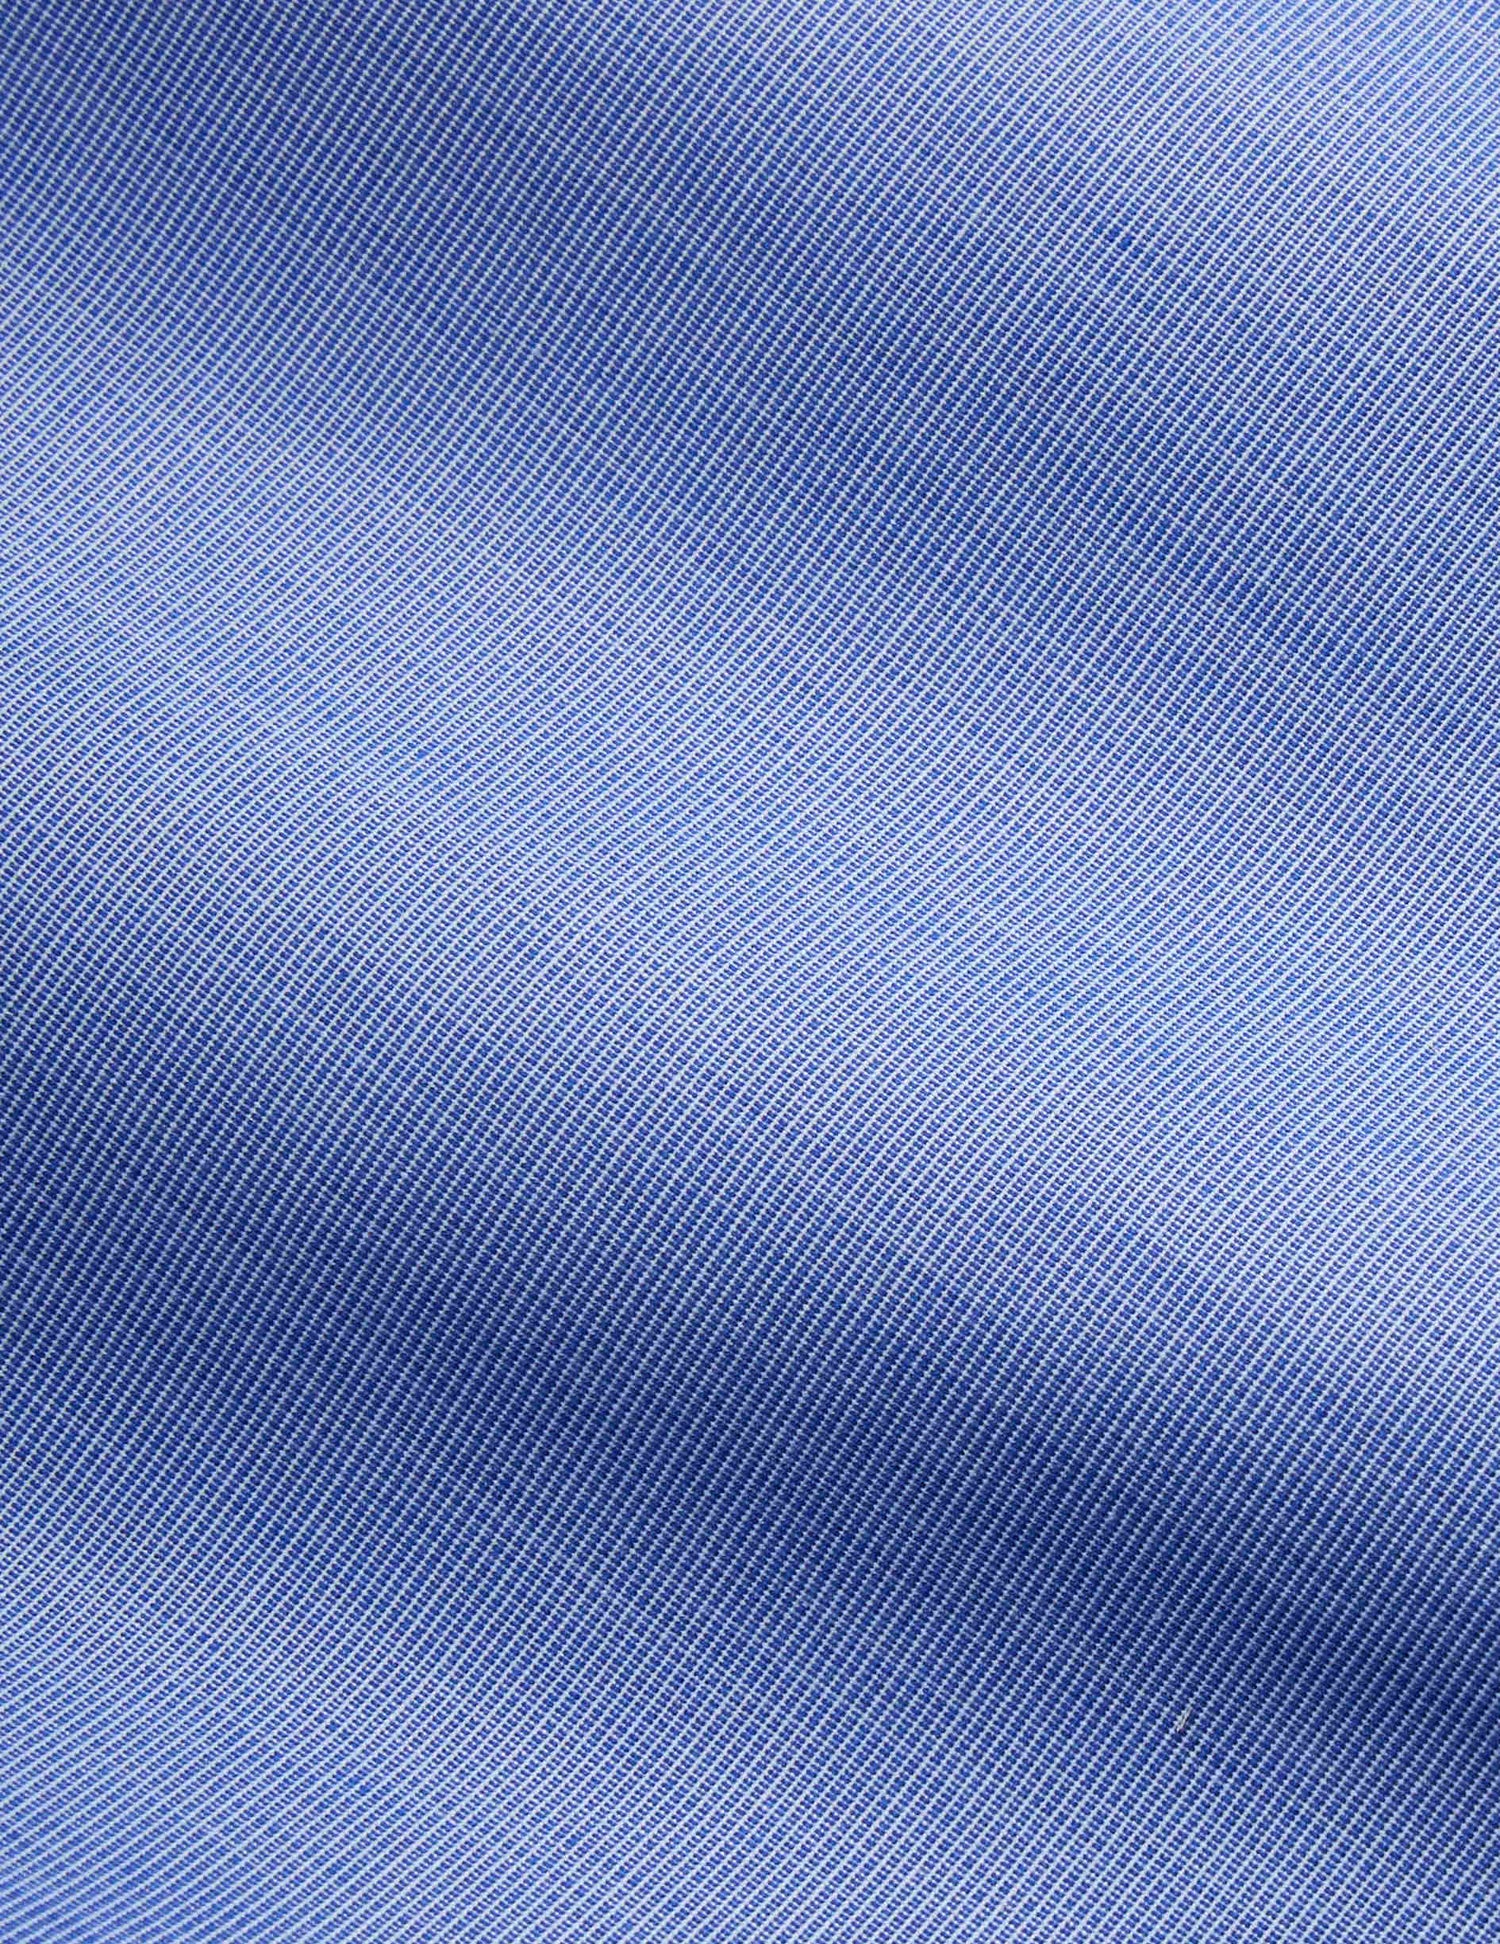 Chemise Semi-ajustée bleue - Fil-à-fil - Col Figaret#2